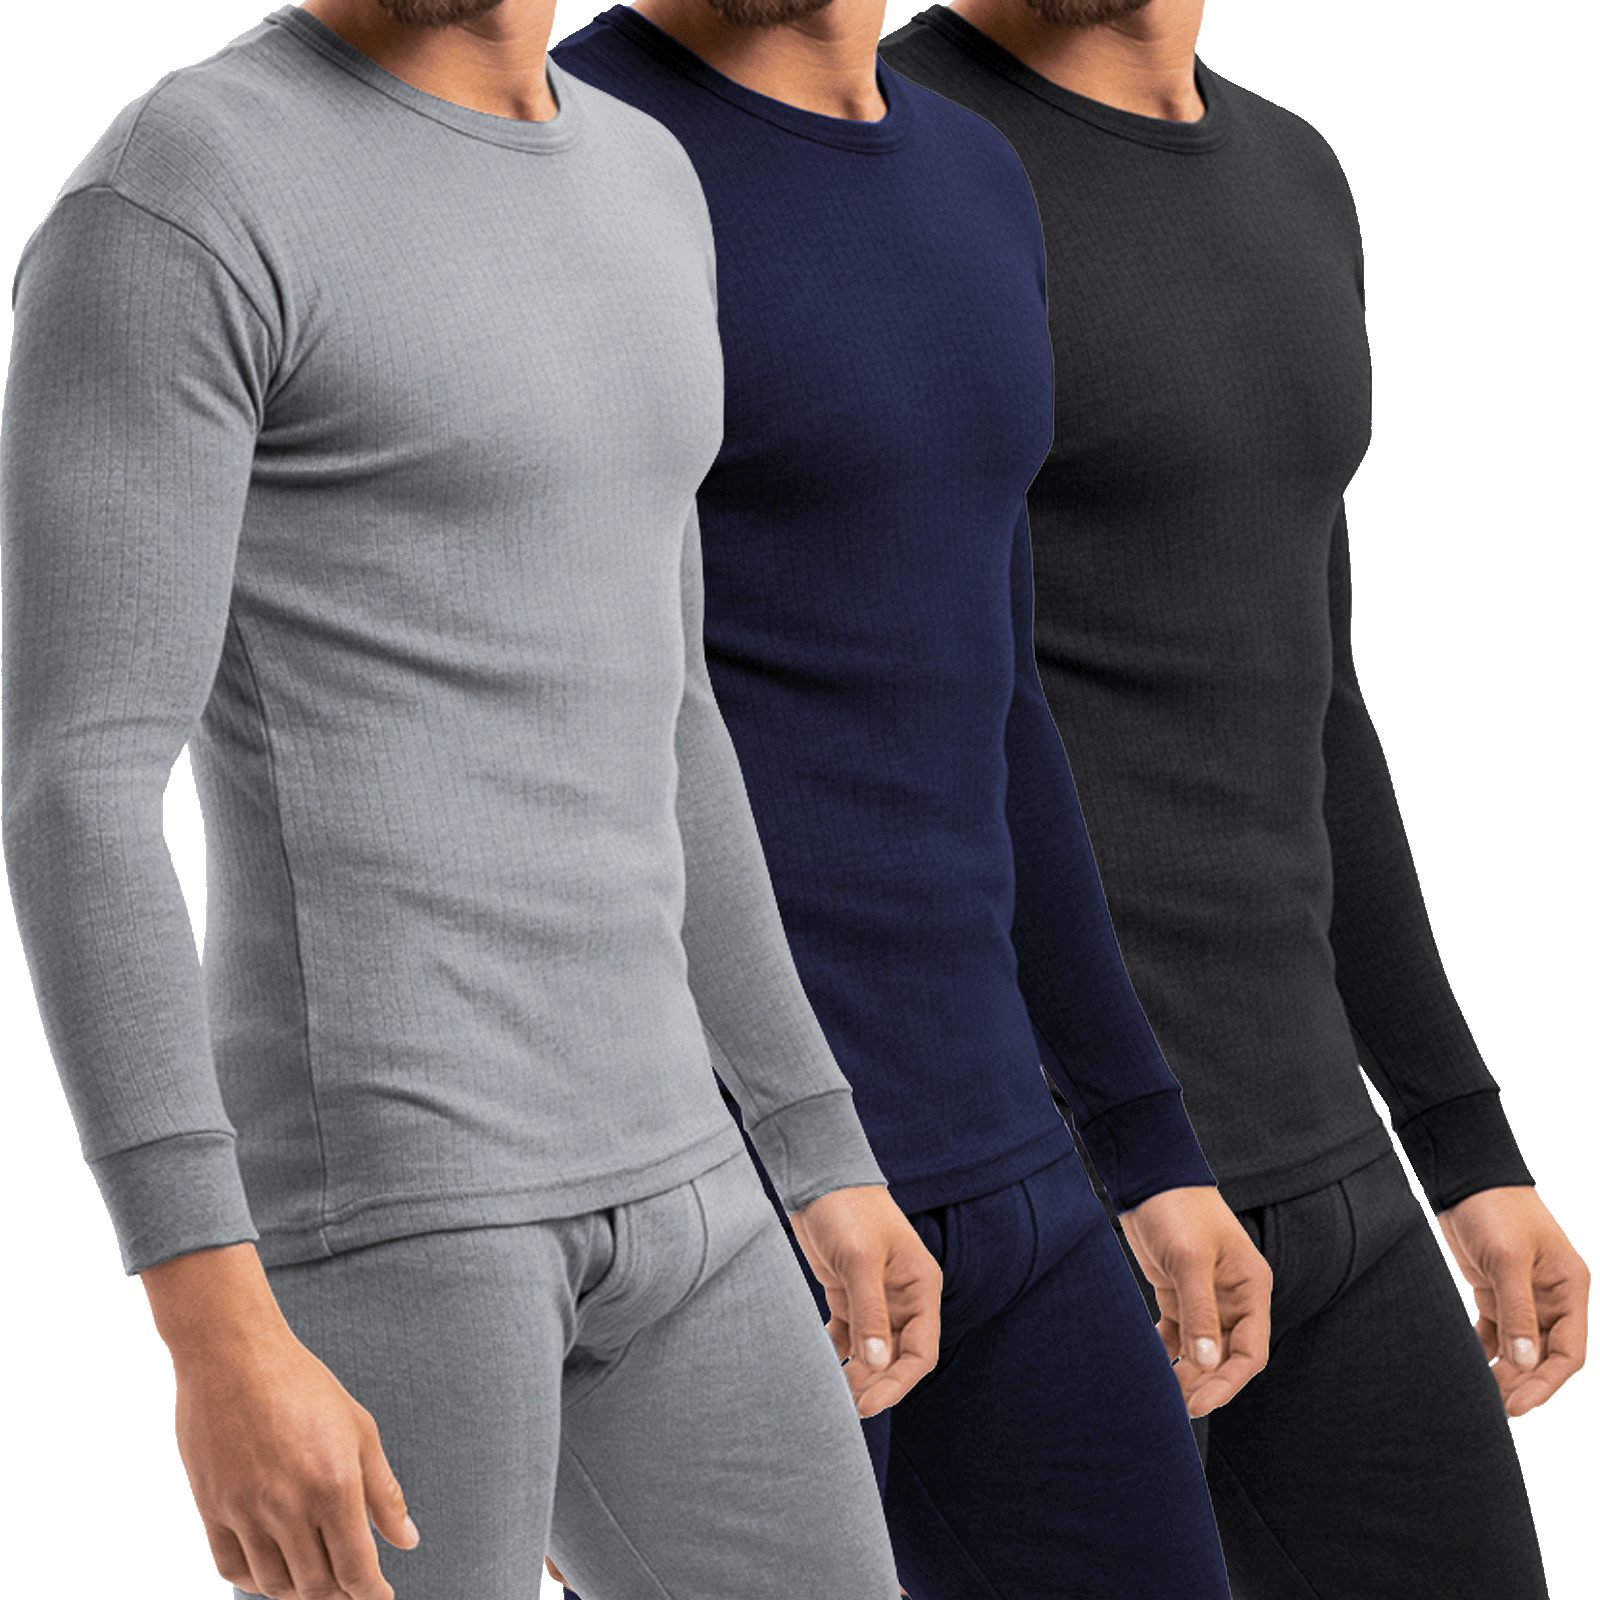 Markenwarenshop-Style Thermounterhemd 3 x Herrenunterhemd Thermo Langarm Shirt HEAT BOOSTER Größe: XXL